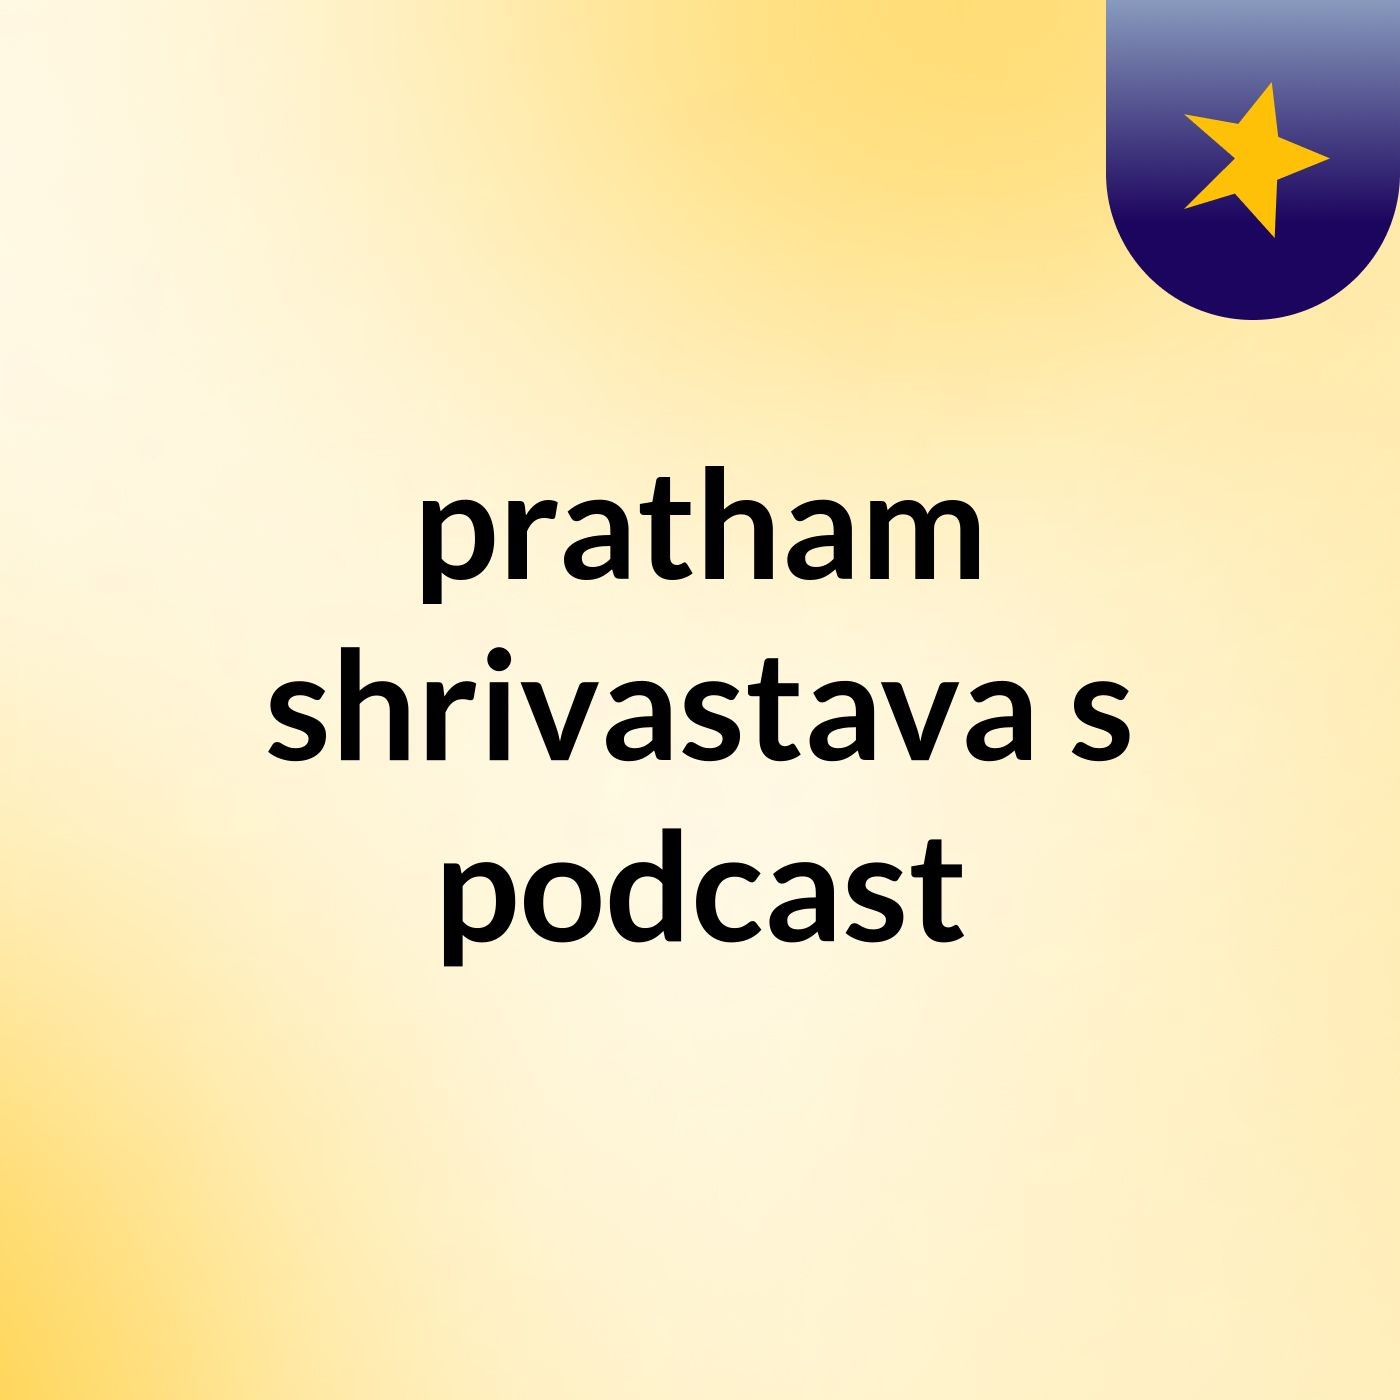 Episode 3 - pratham shrivastava's podcast